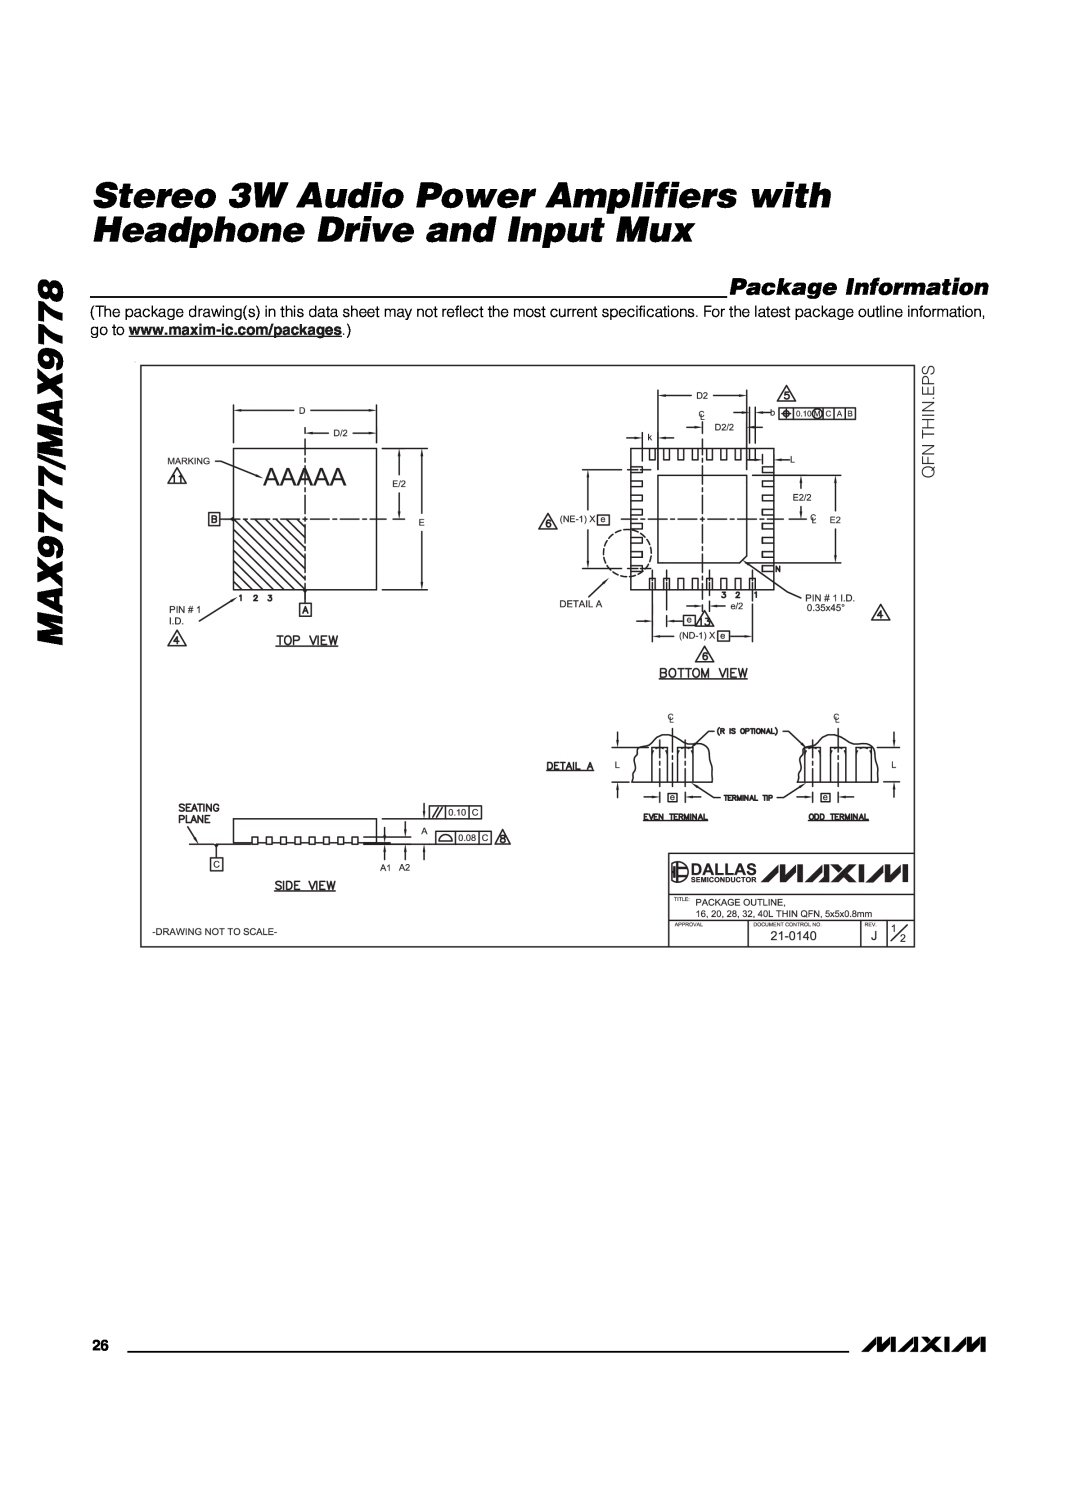 Maxim manual Package Information, MAX9777/MAX9778, Qfn Thin.Eps 